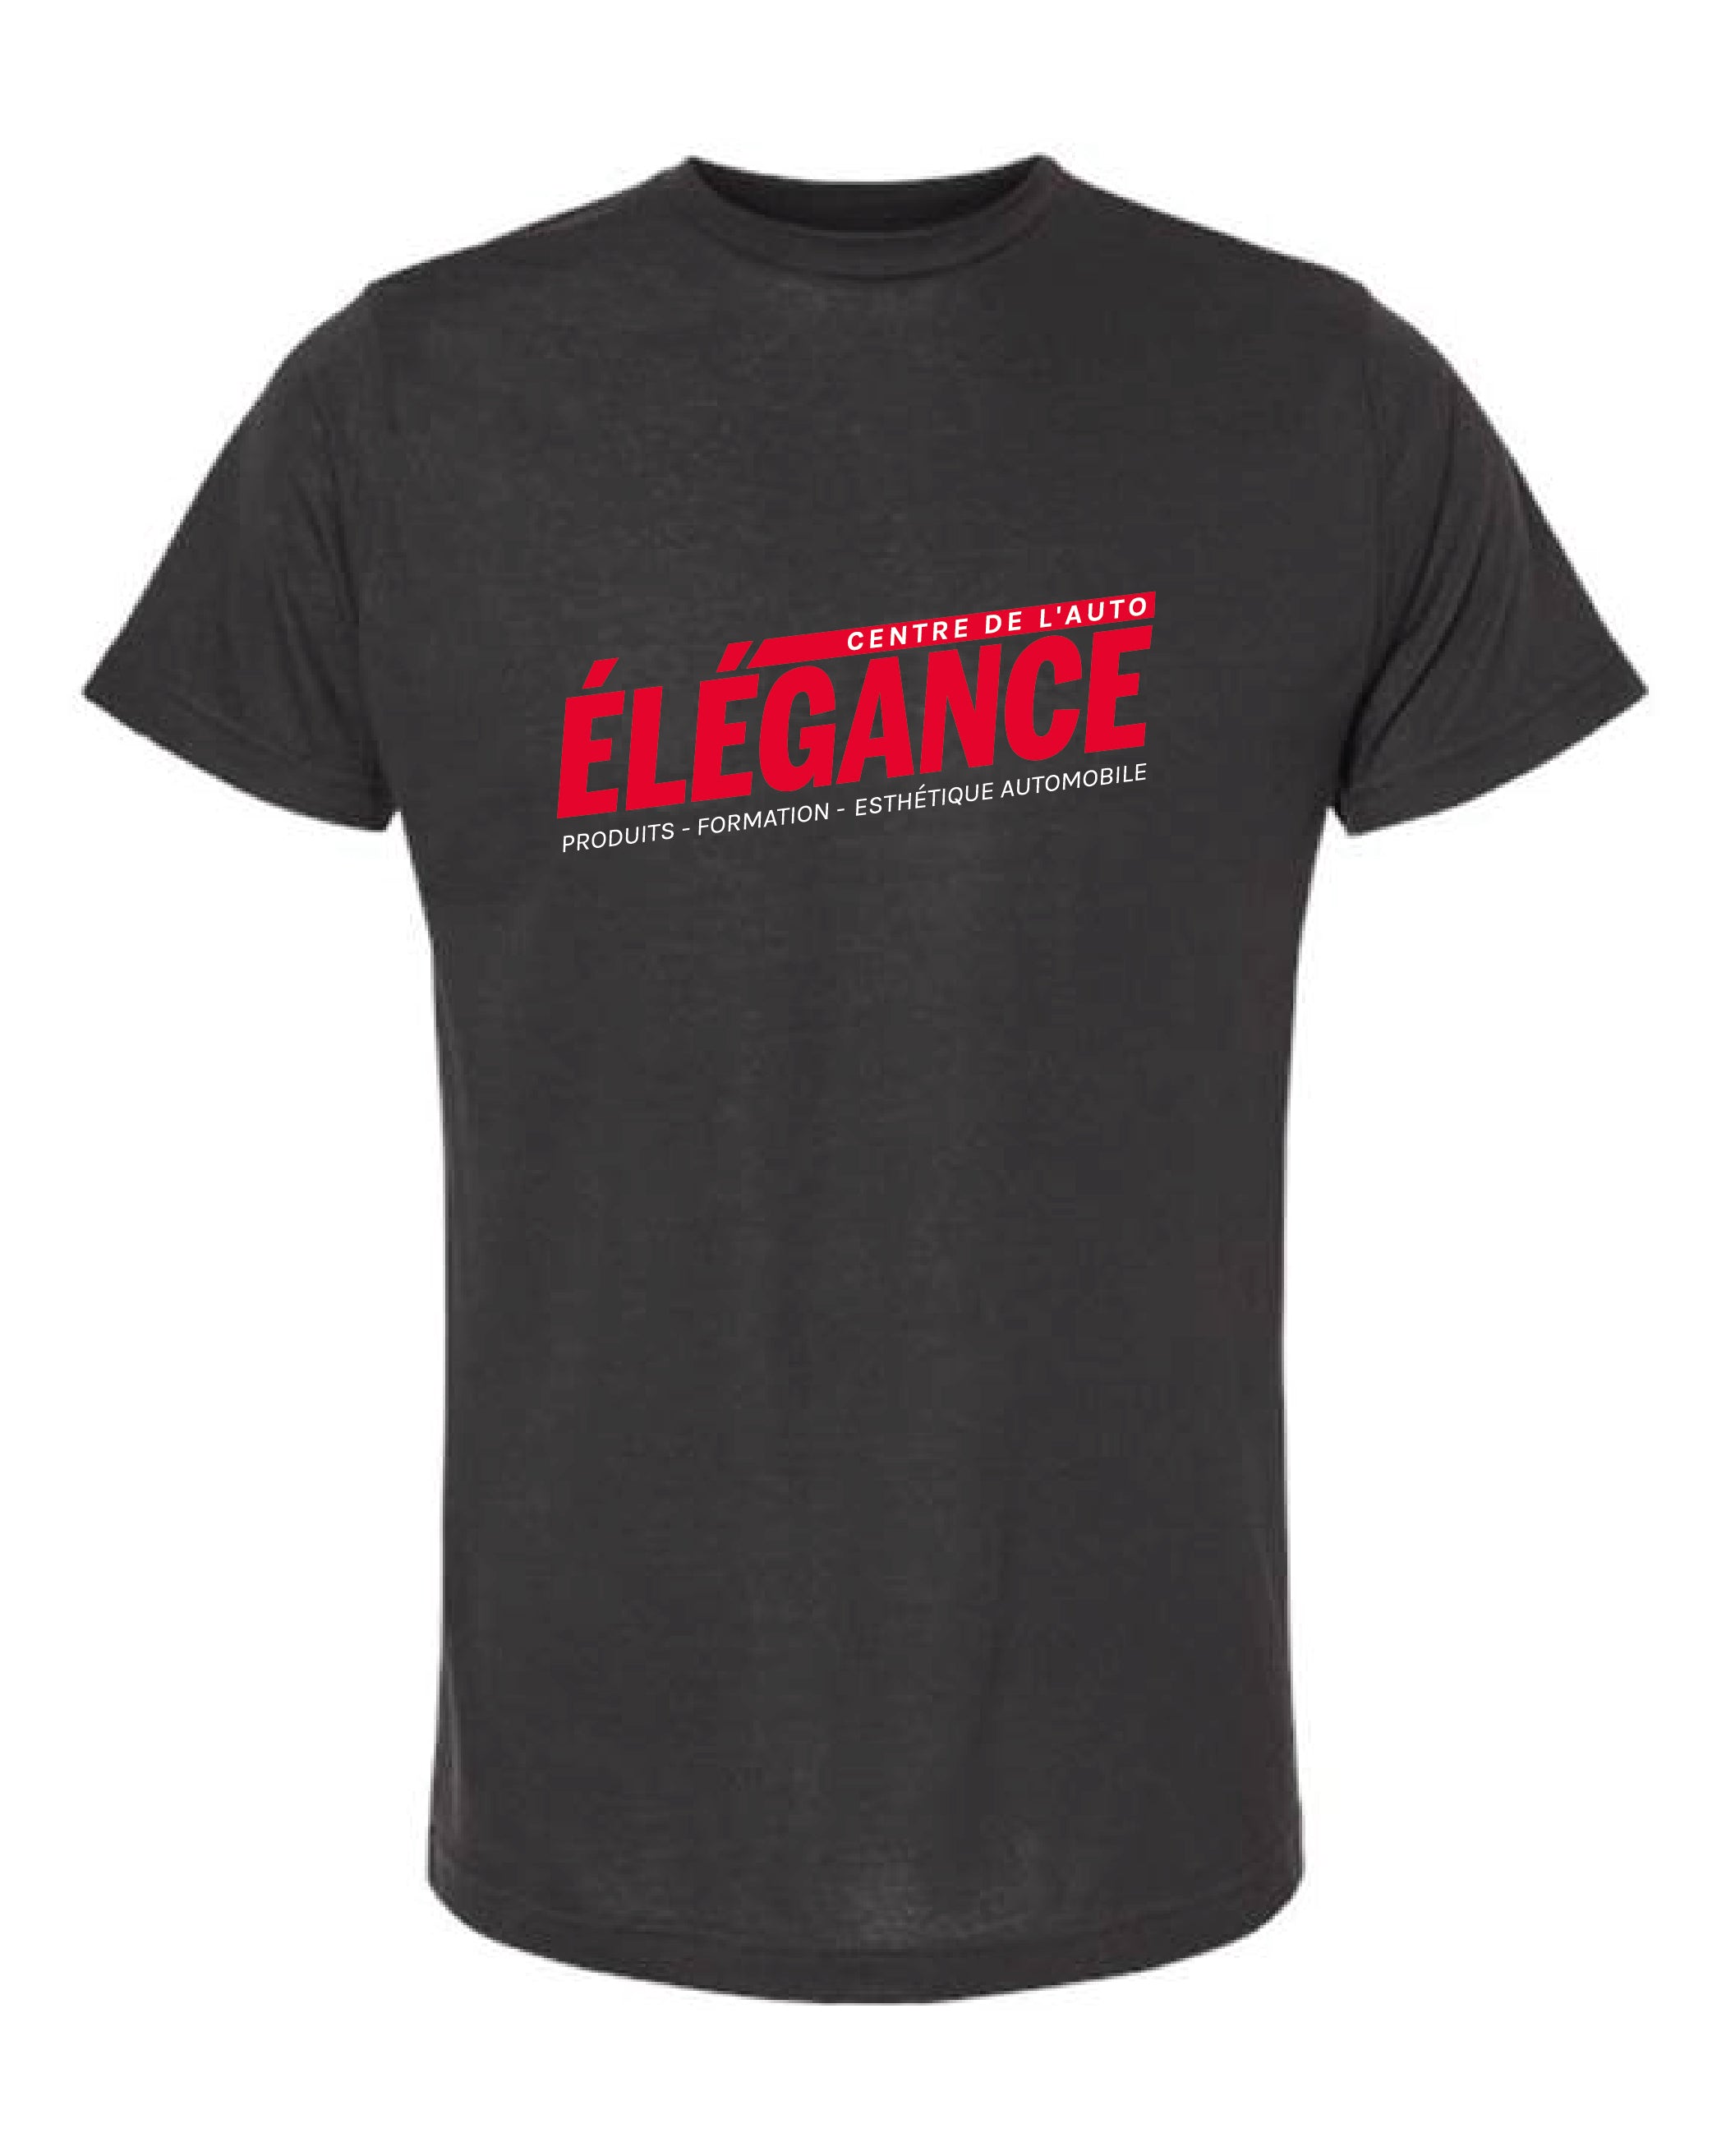 CLOTHING - ELEGANCE XL T-Shirt